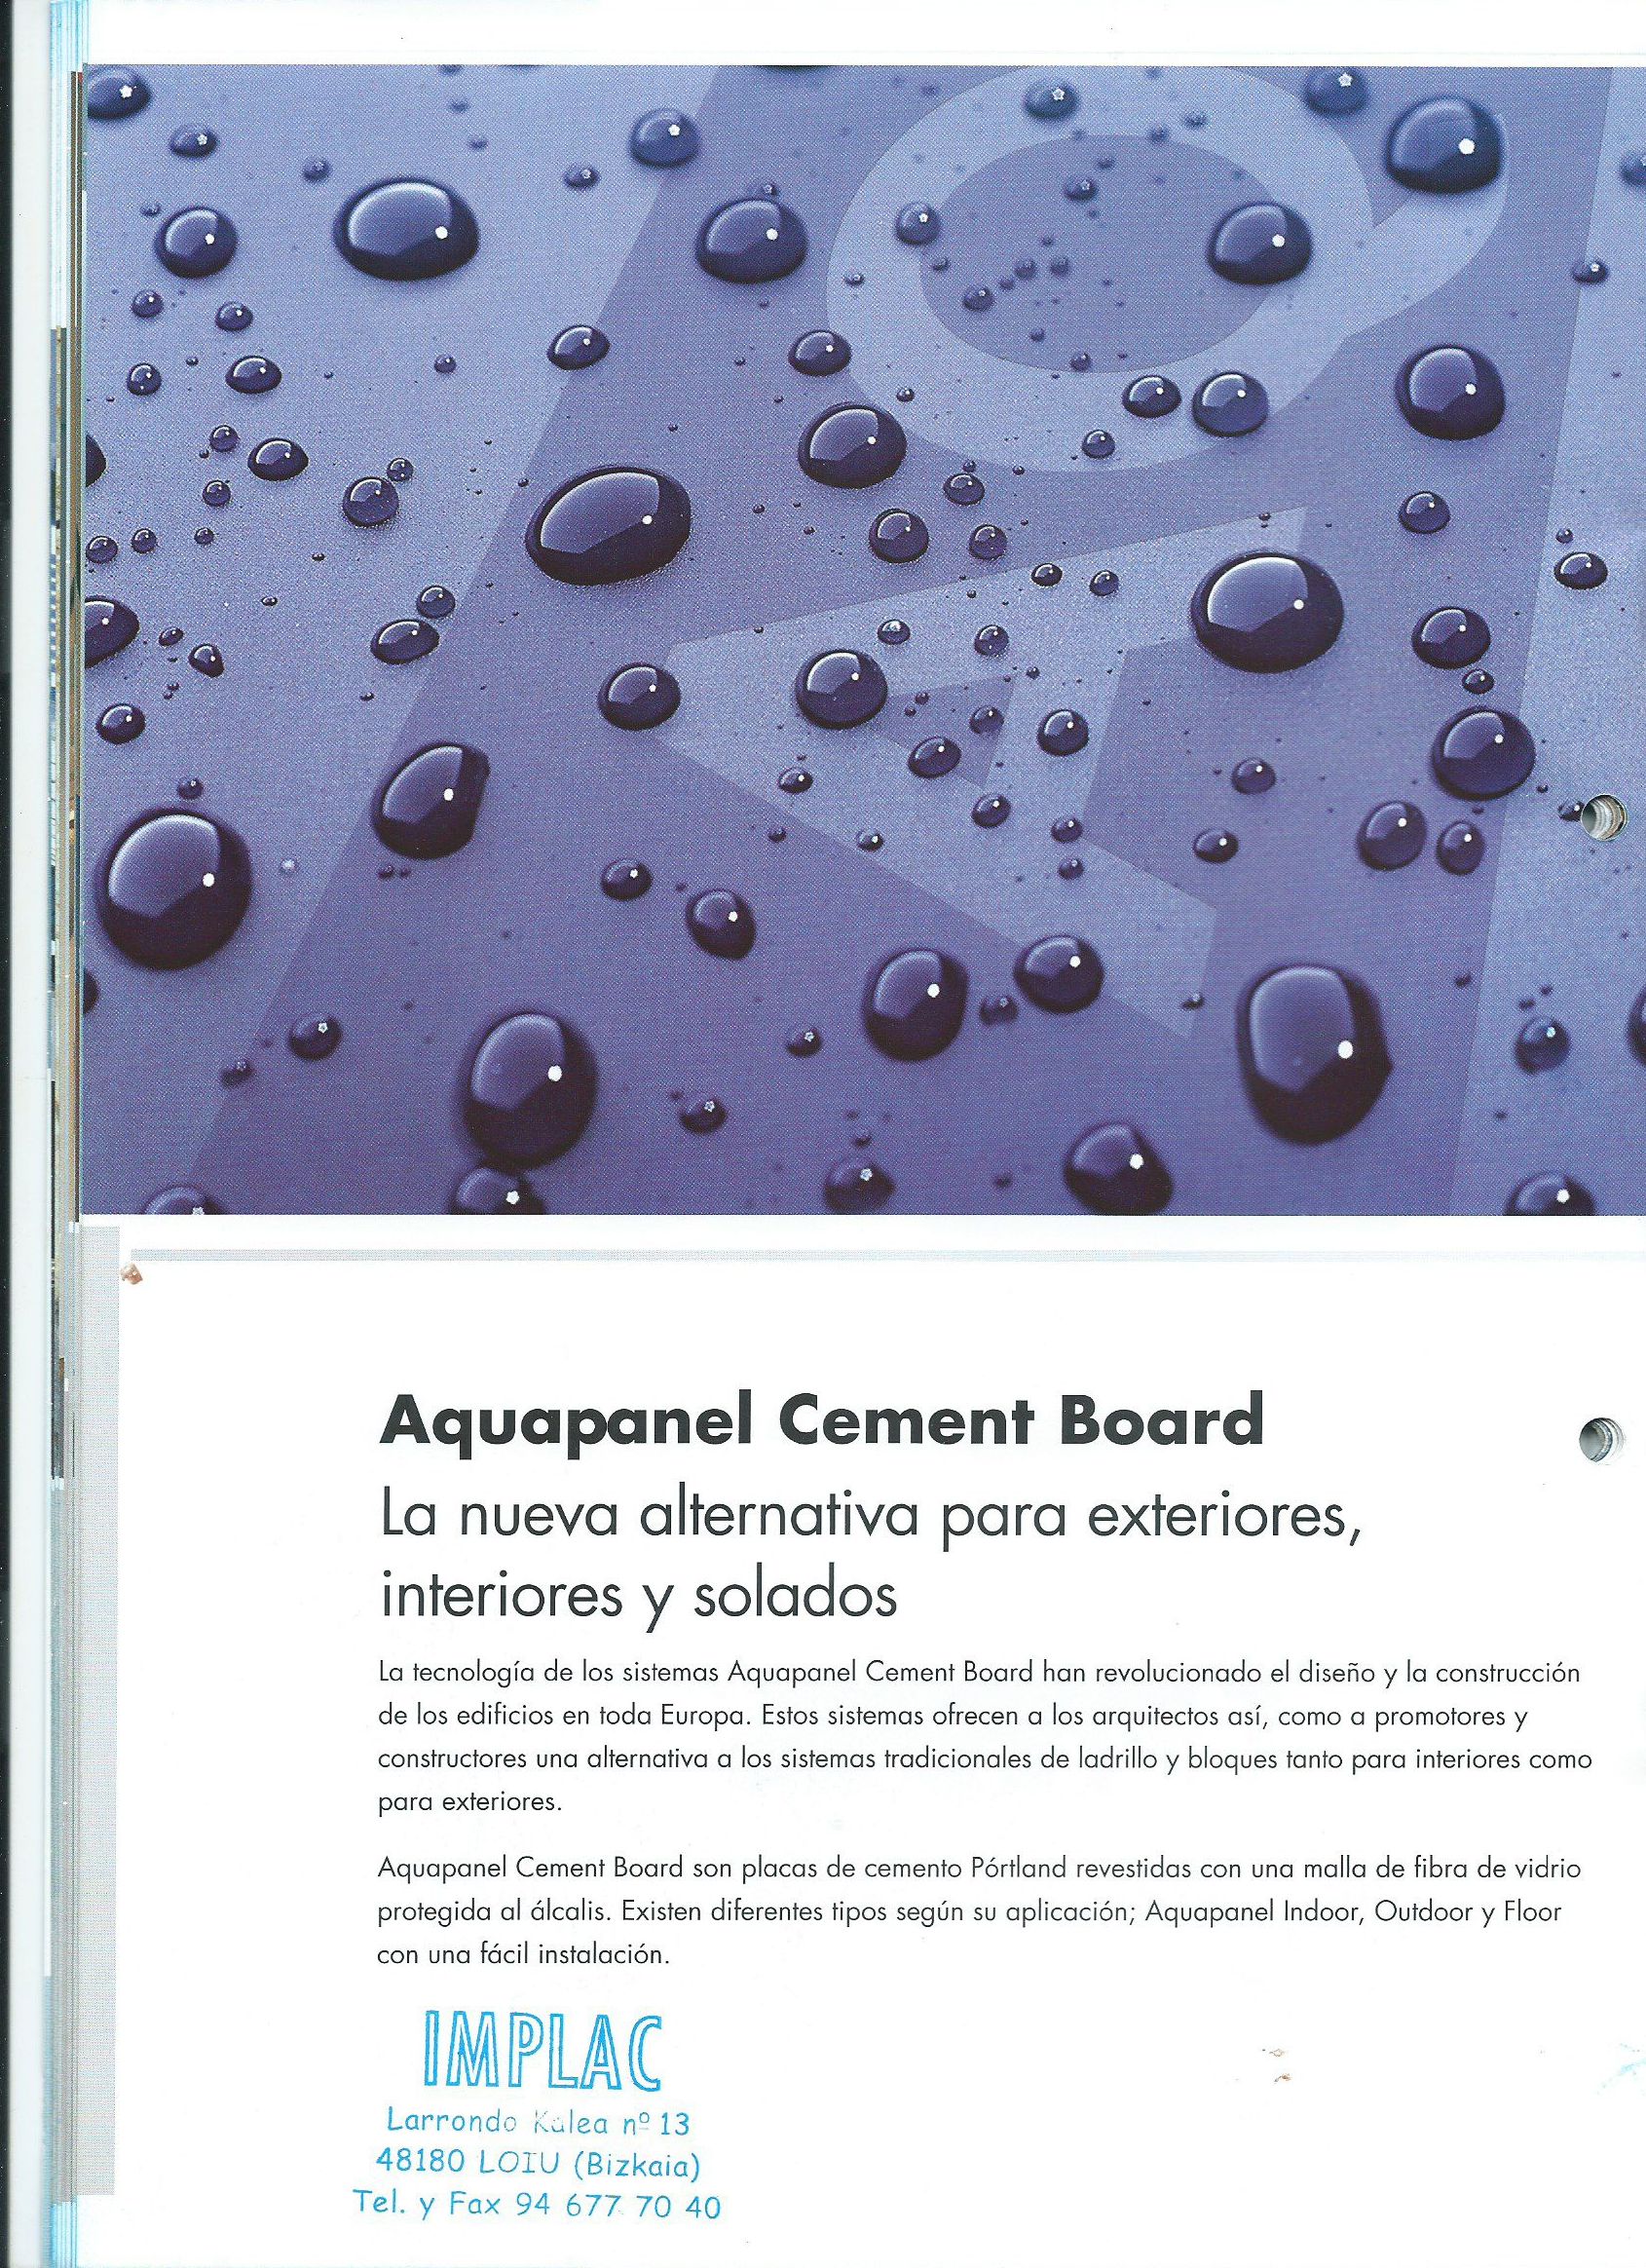 Aquapanel Cement Board